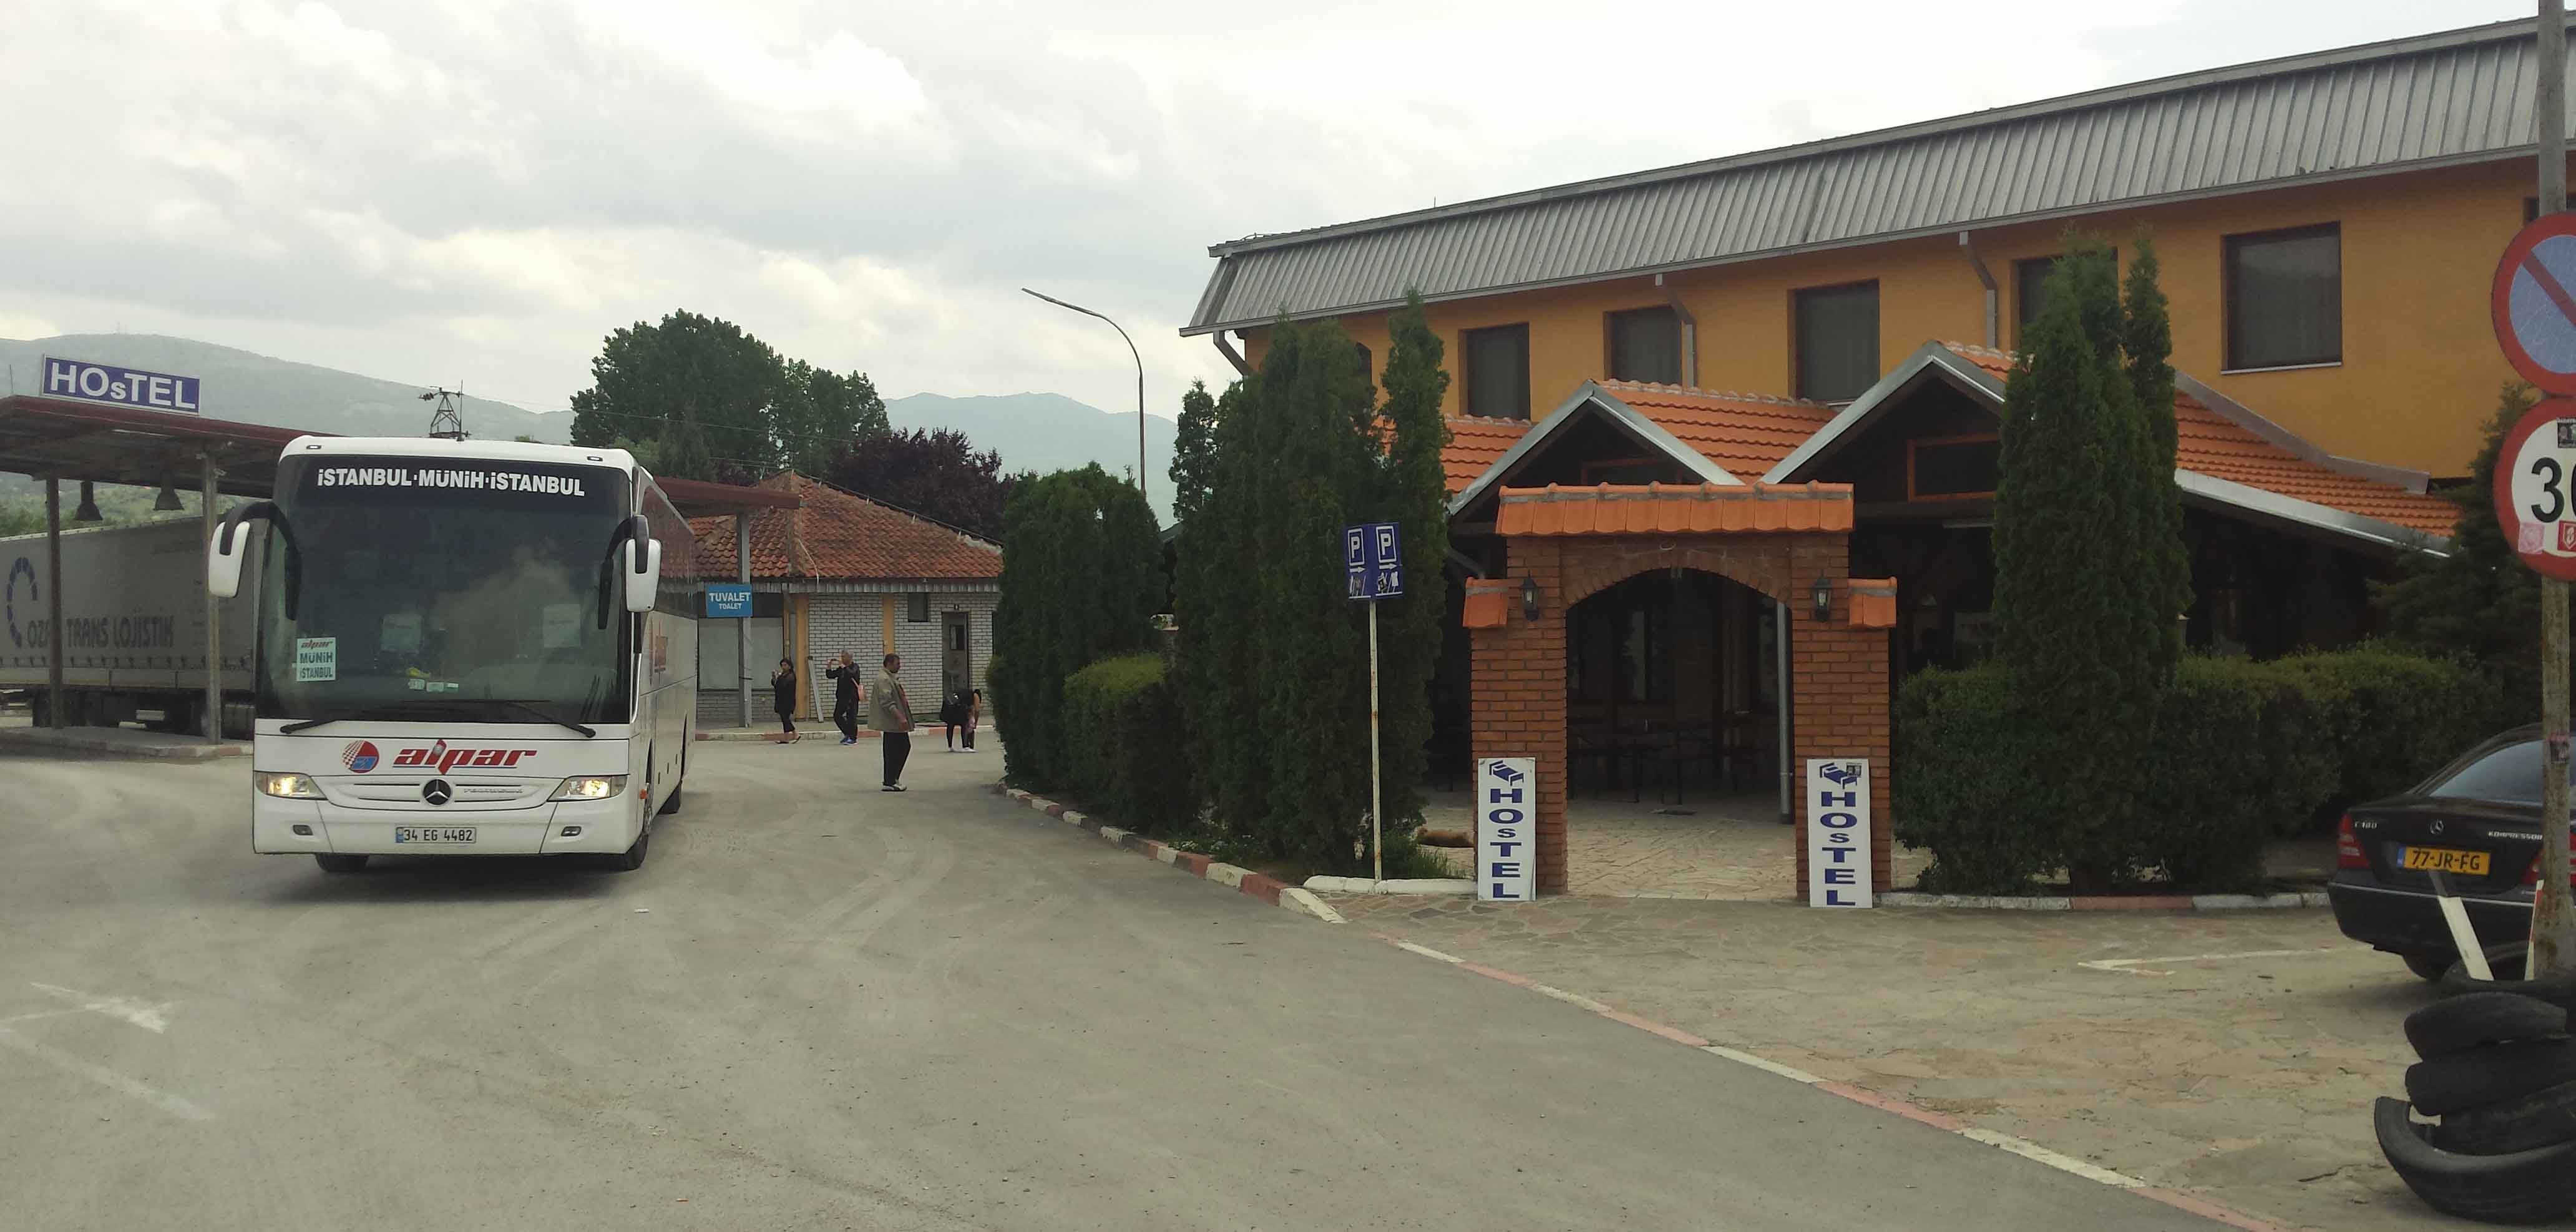 Türk motel restorant ulaz